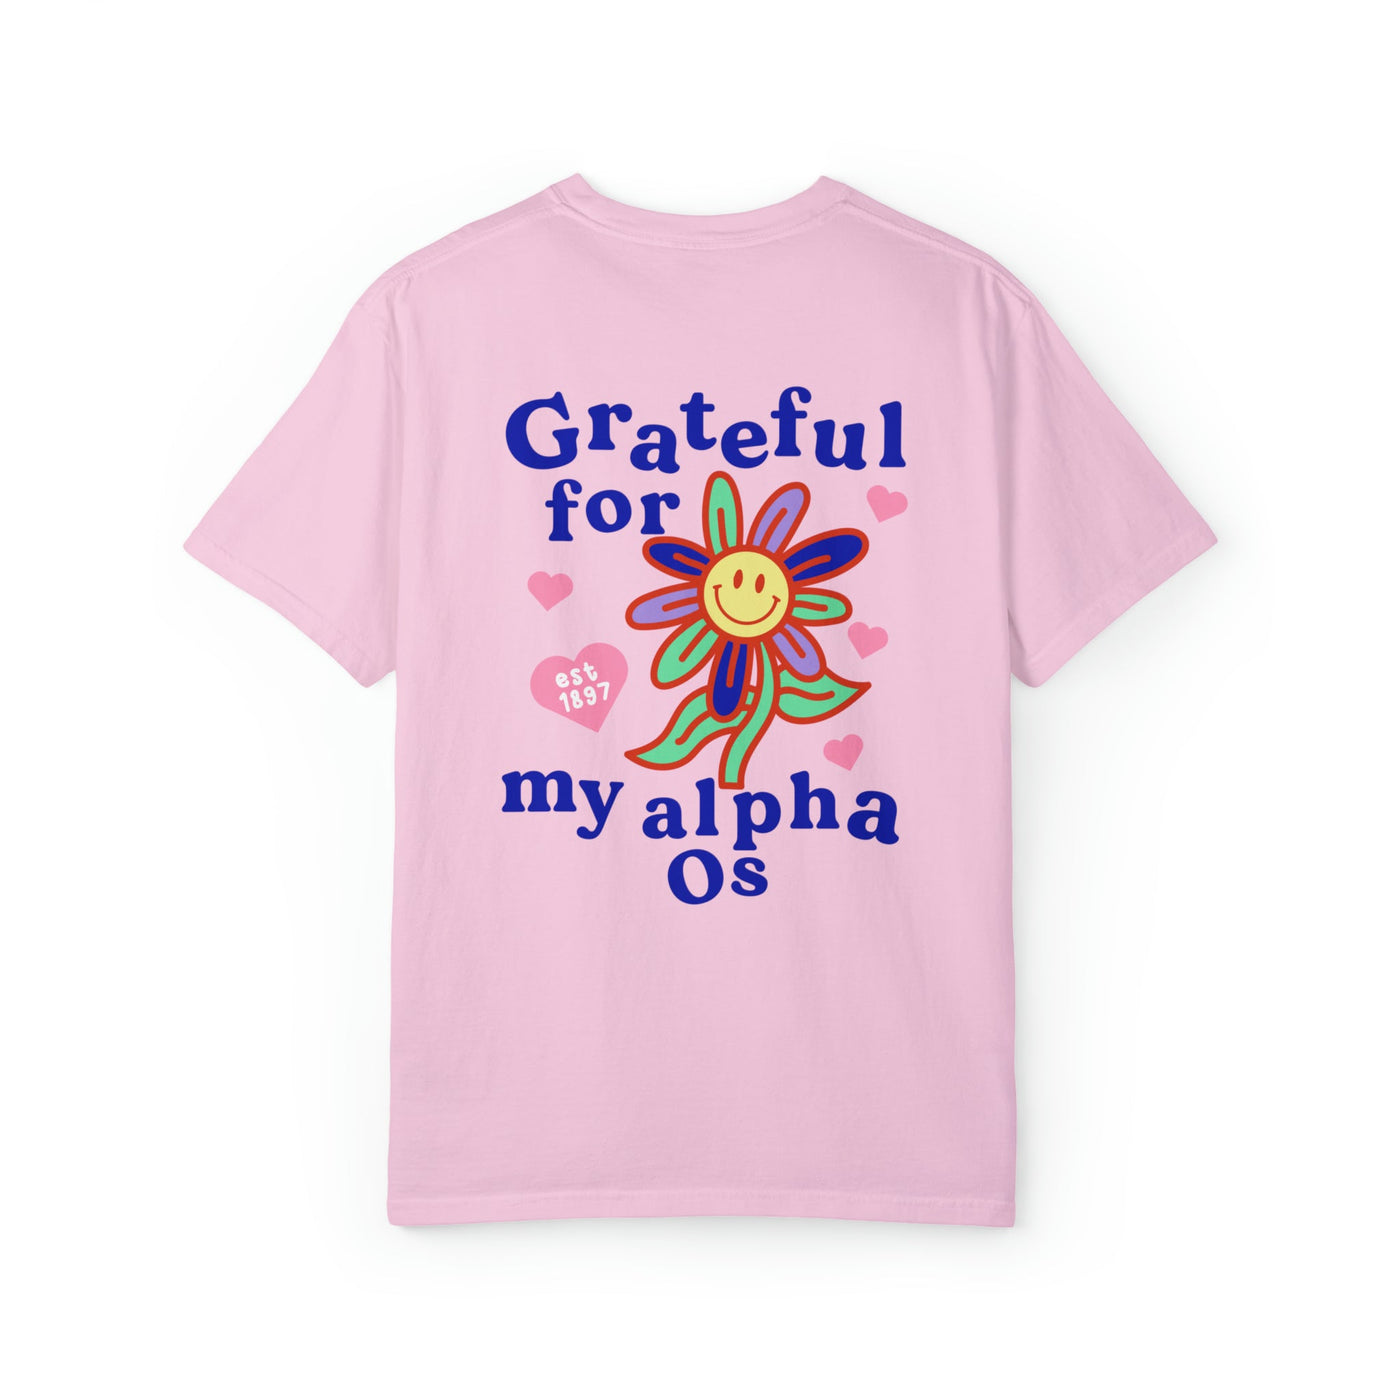 Alpha Omicron Pi Grateful Flower Sorority T-shirt